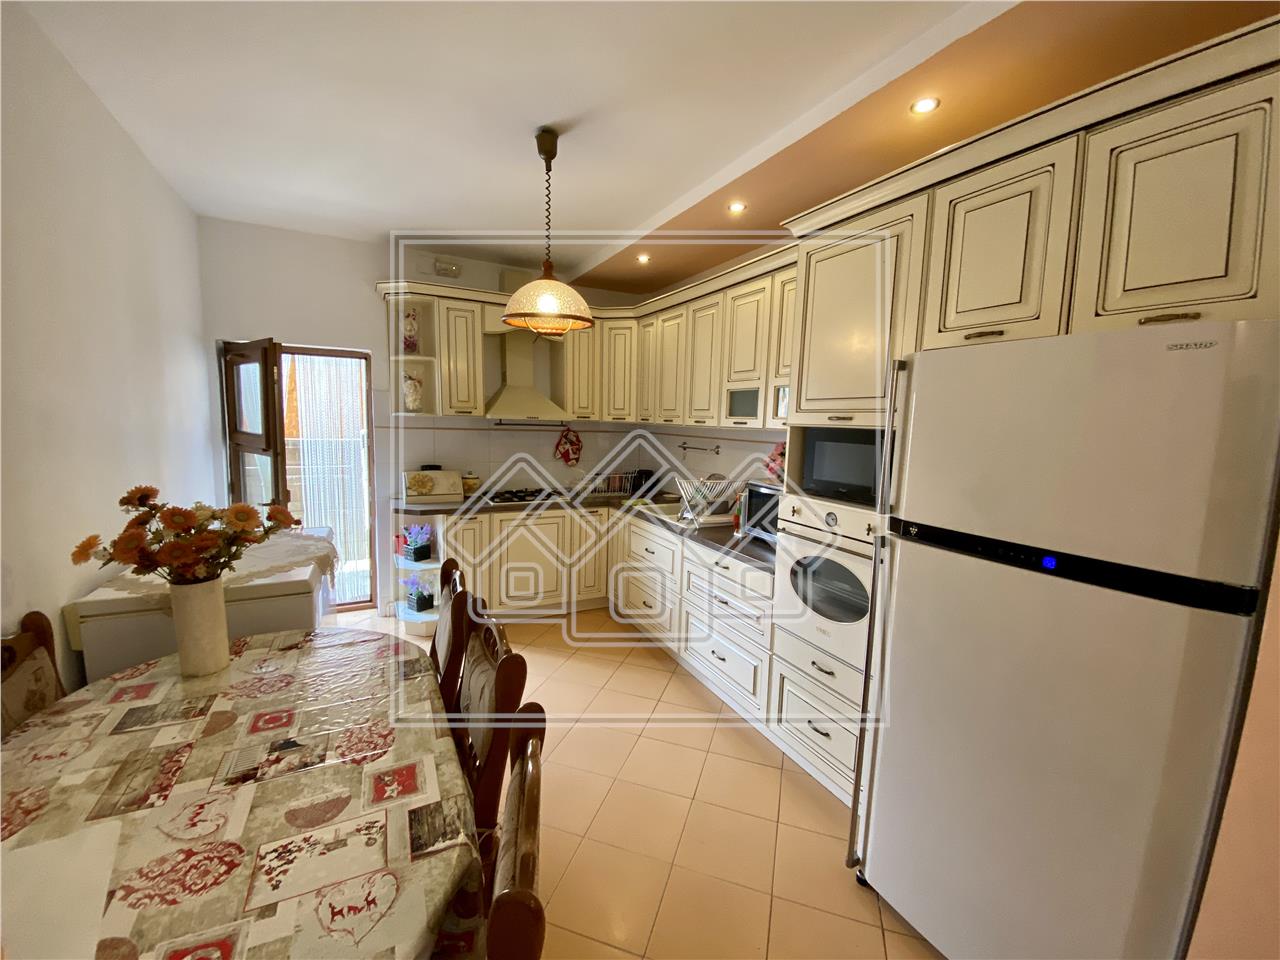 5 room apartment for rent in Sibiu - Calea Dumbravii - own yard 67 sqm